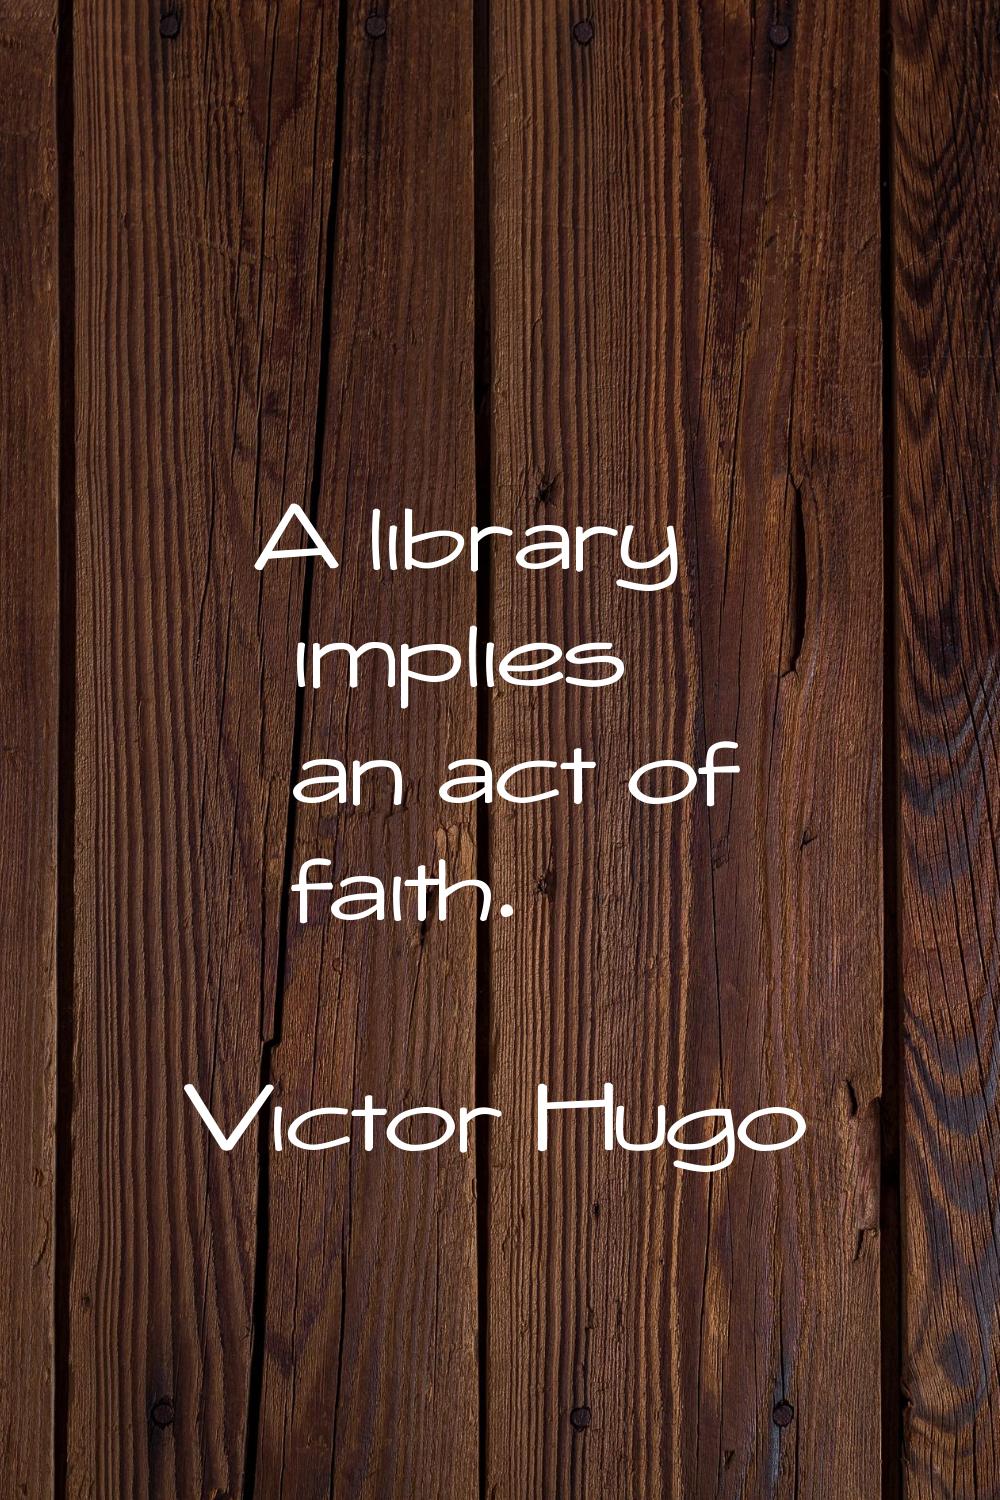 A library implies an act of faith.